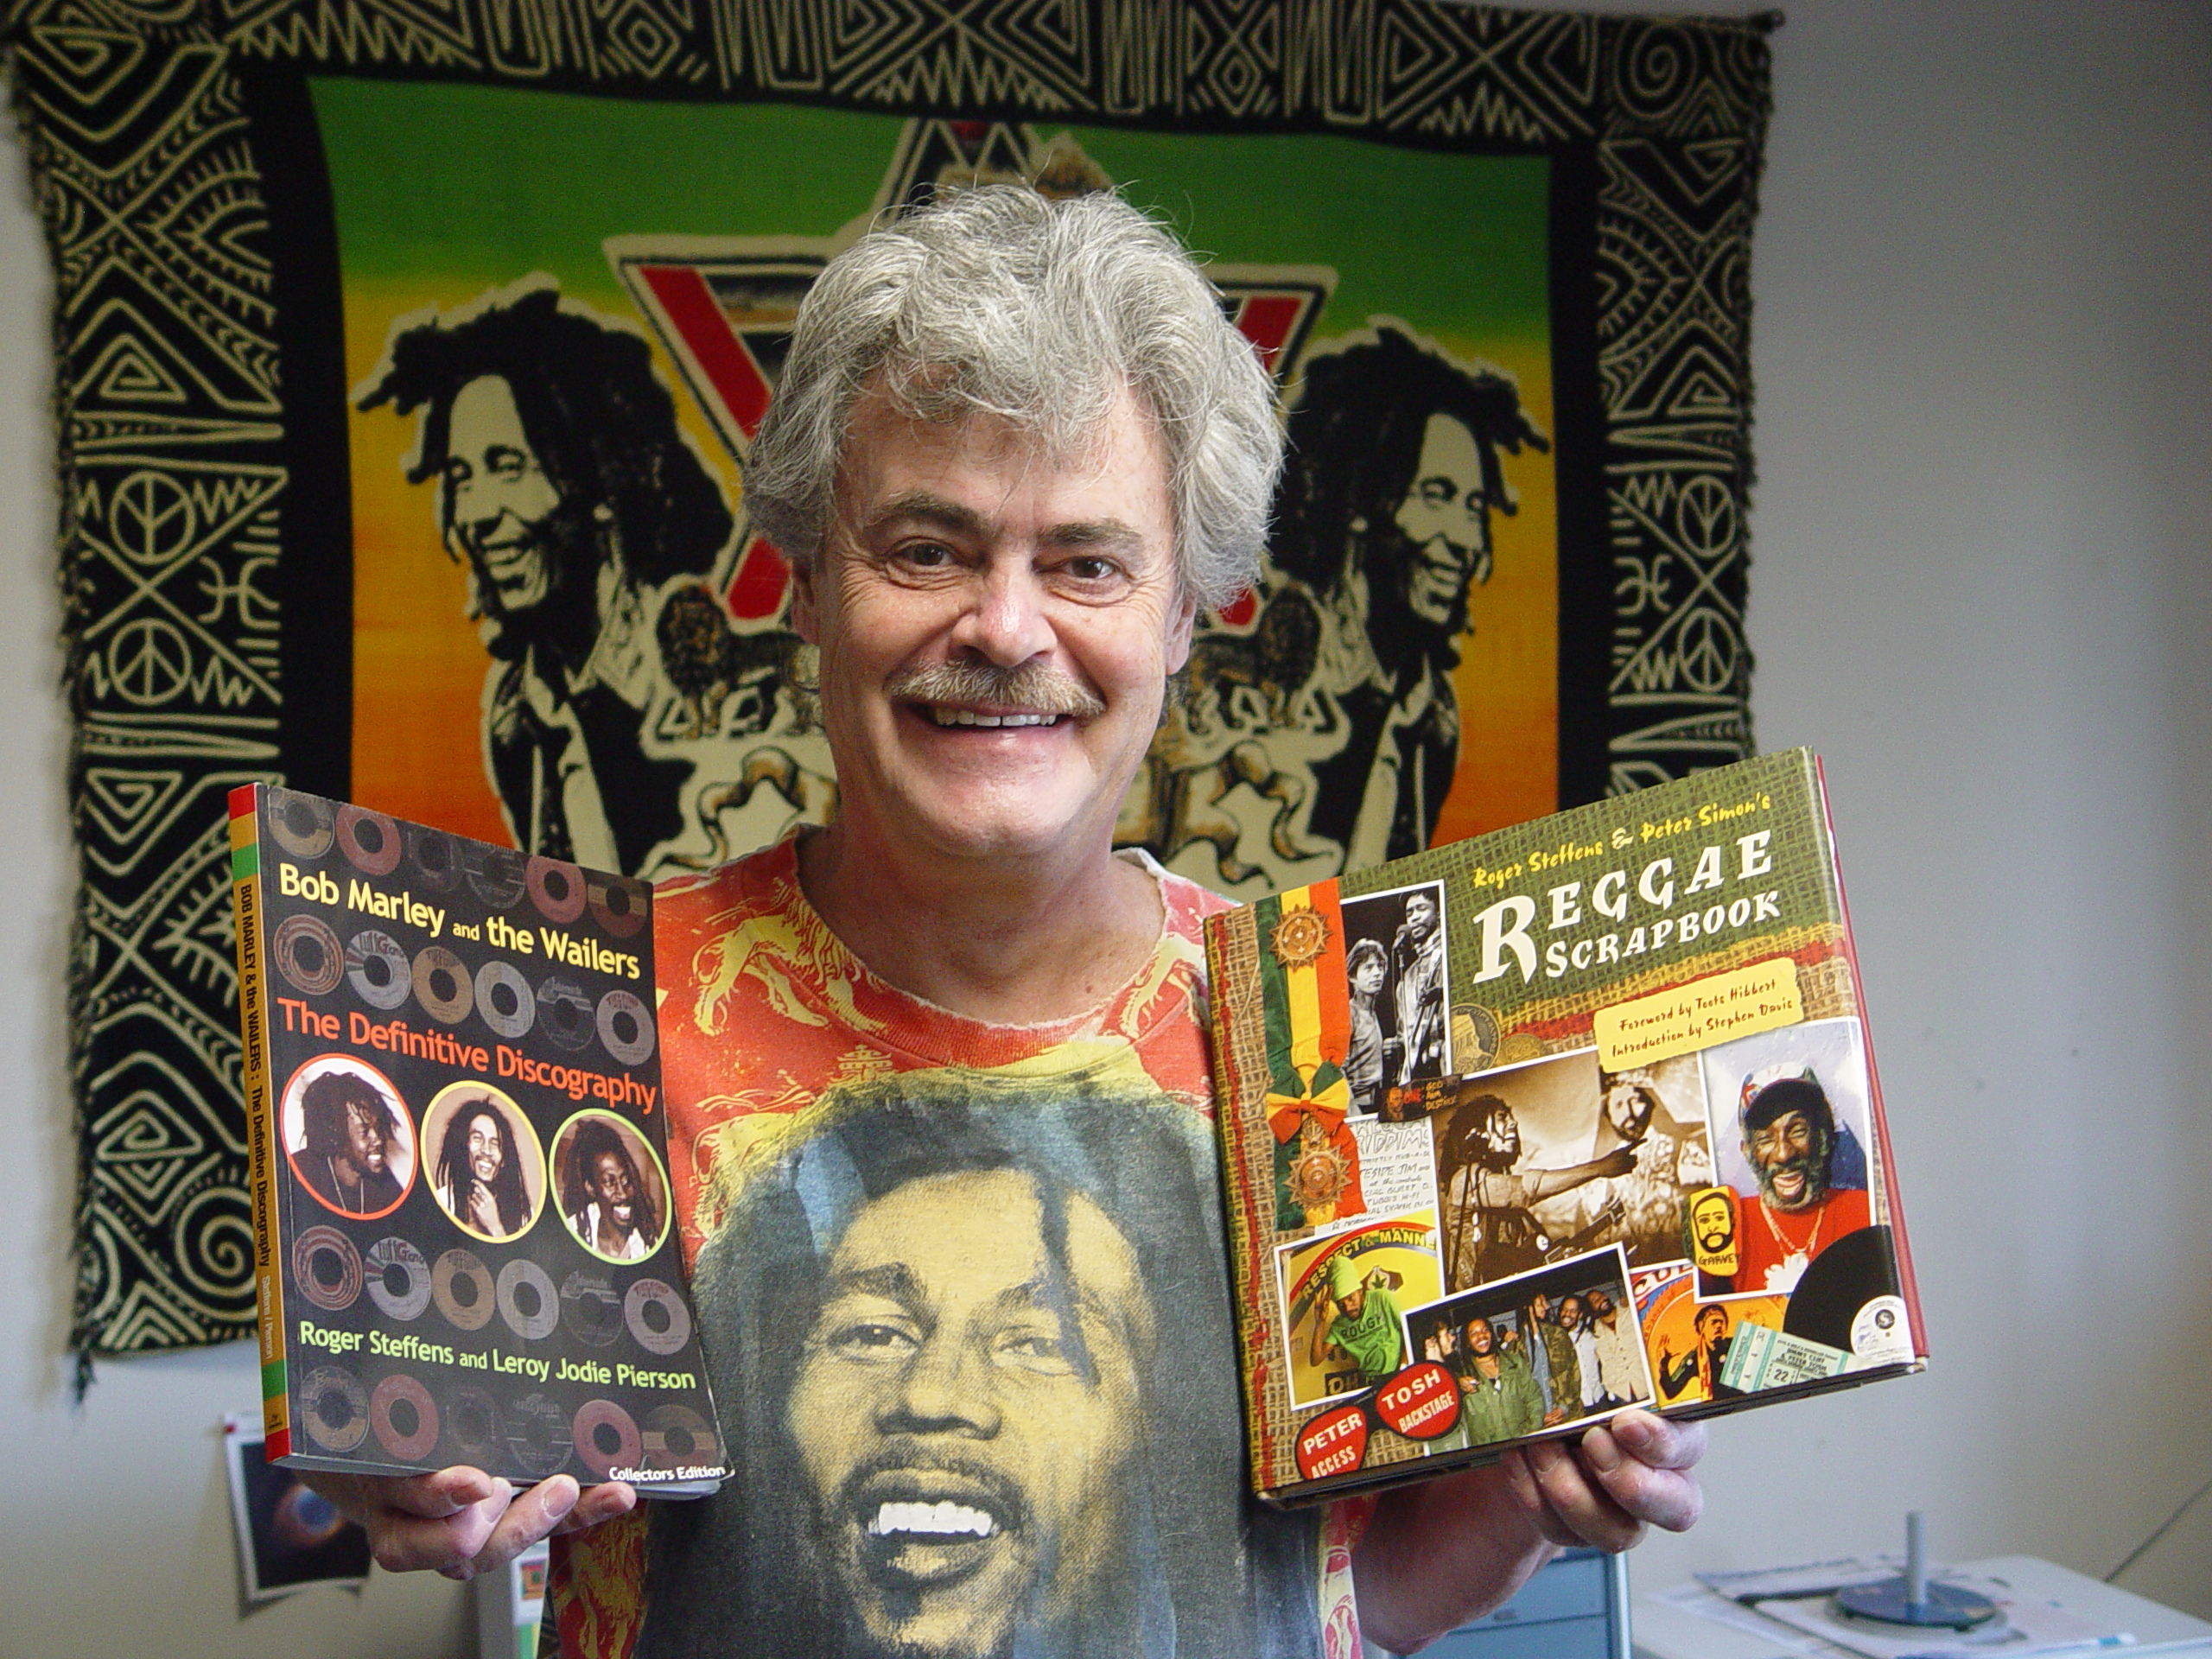 Roger Steffens, Reggae Encyclopedist and “Family Acid” Photographer